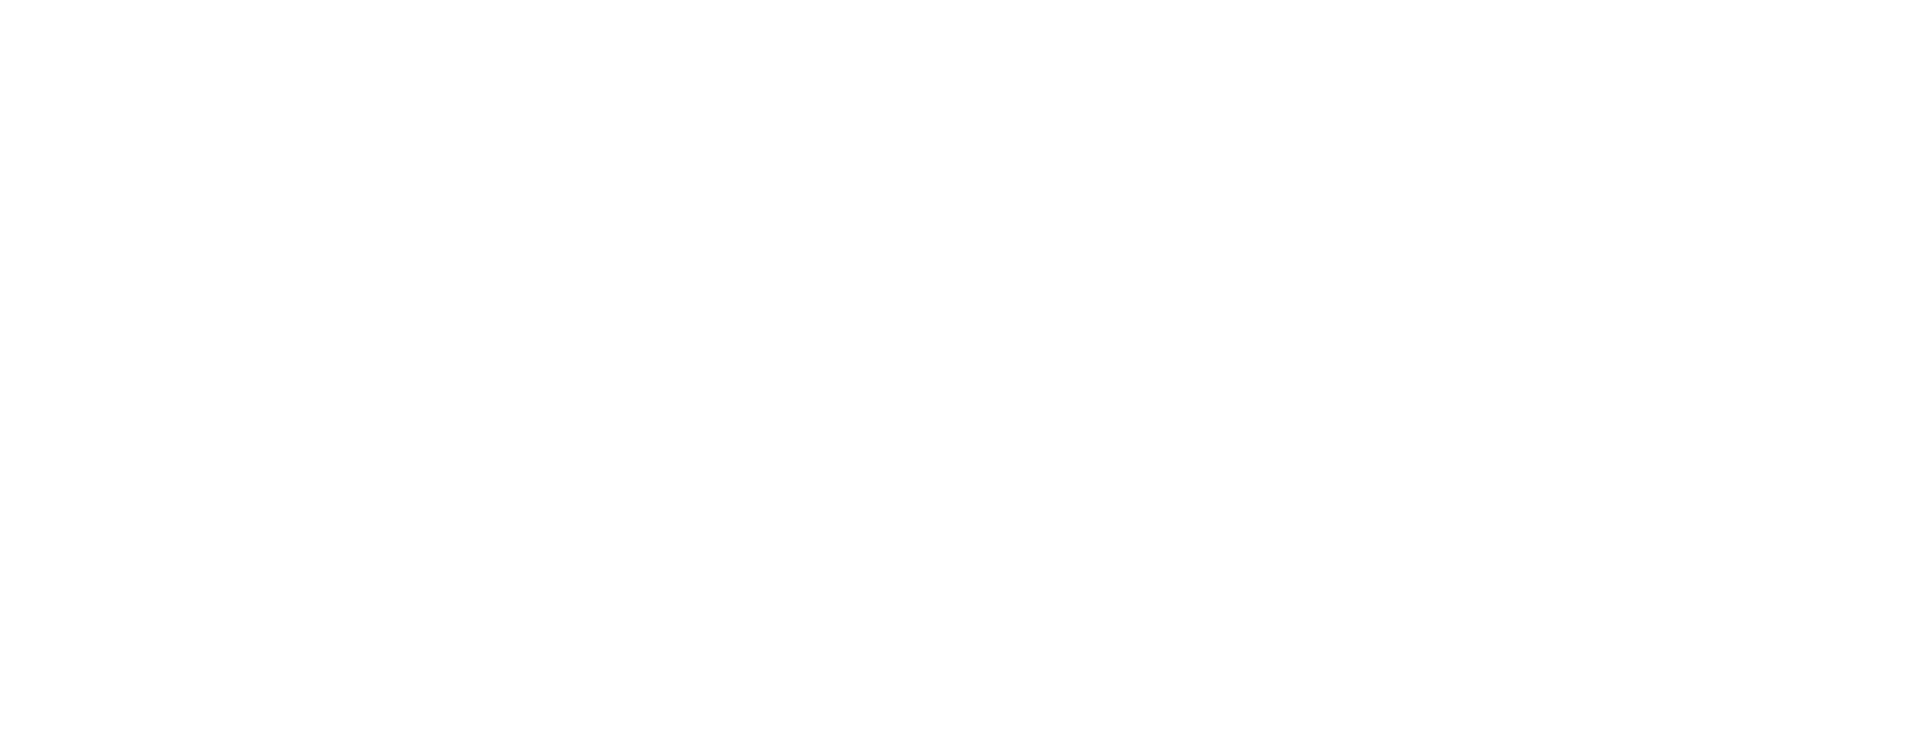 ZTR logo